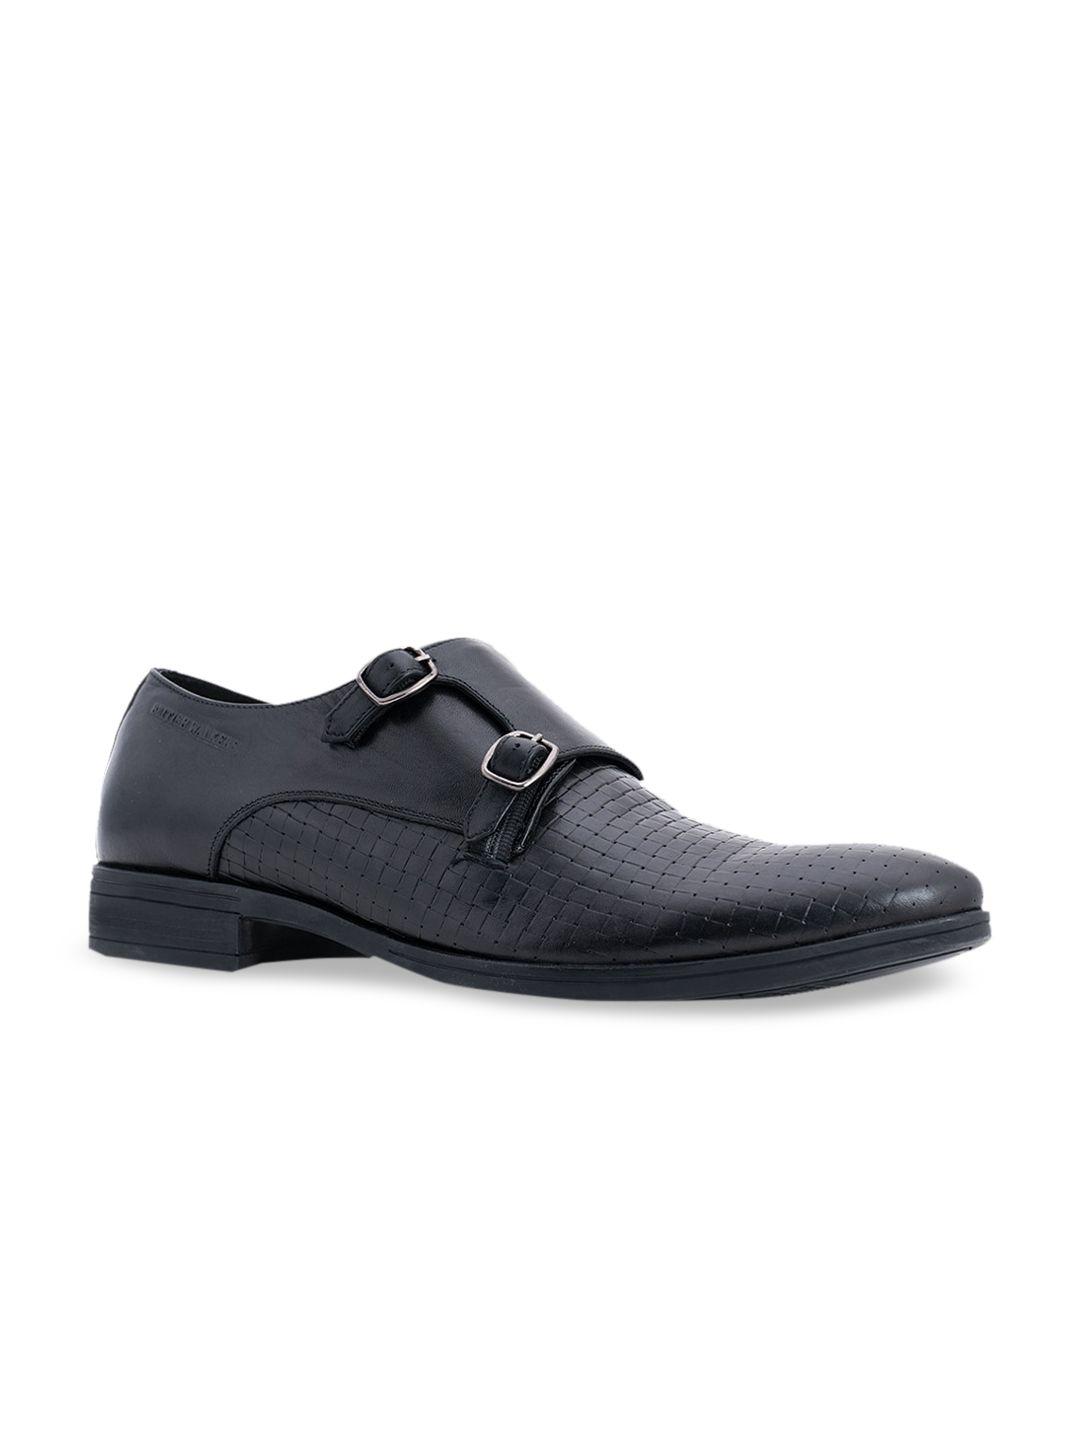 khadims-men-black-textured-genuine-leather-formal-monk-shoes